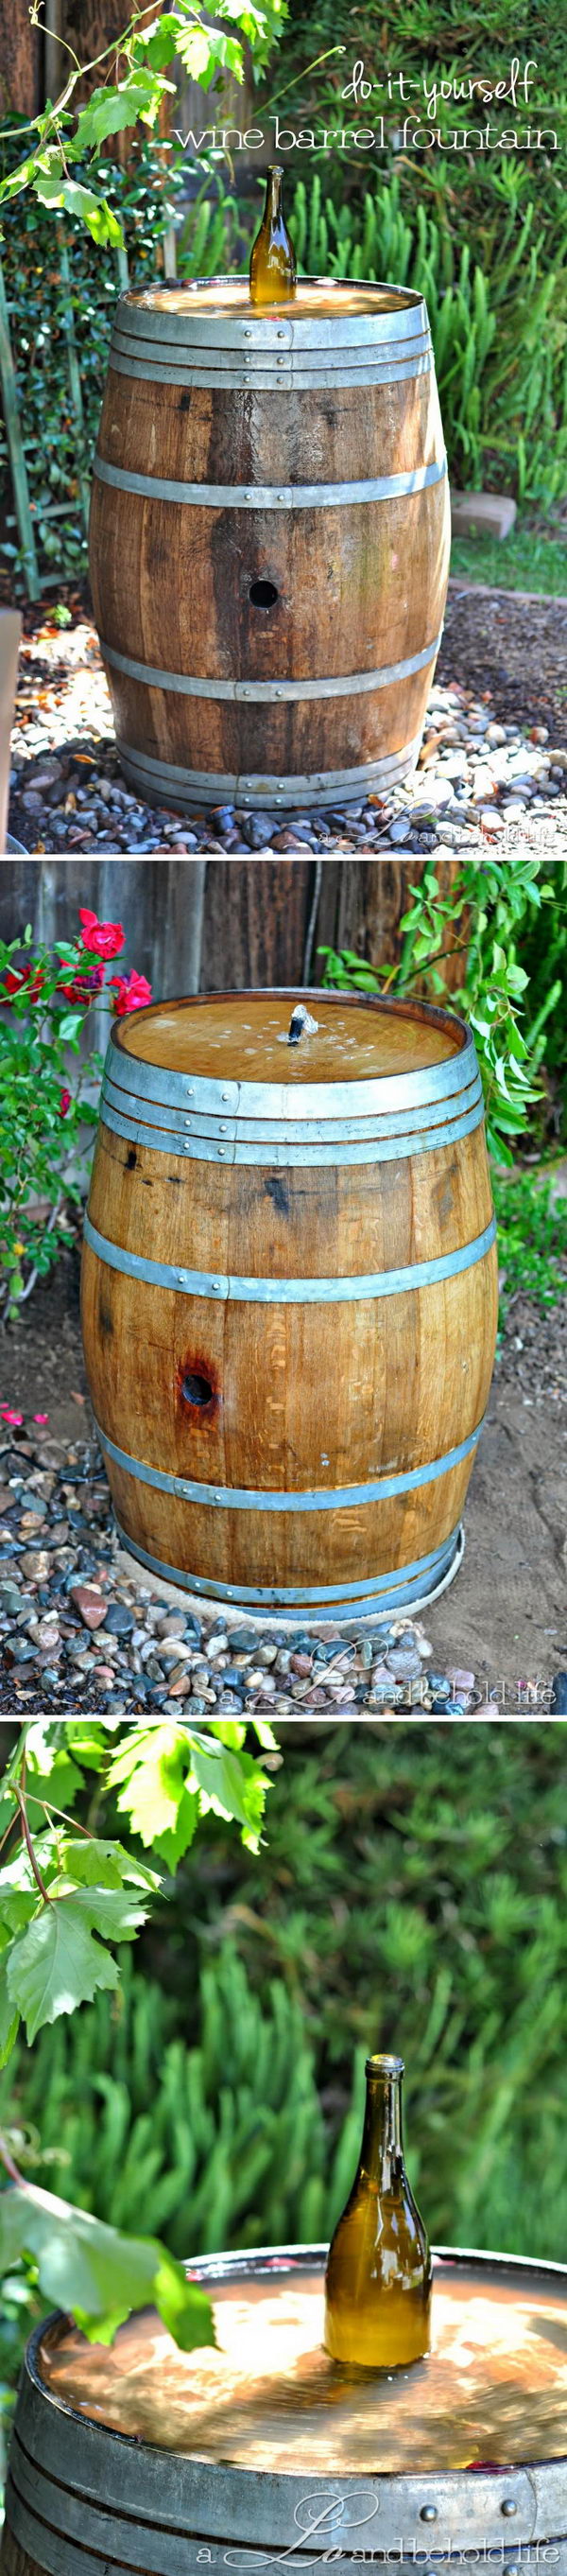 Wine barrel water fountain. 